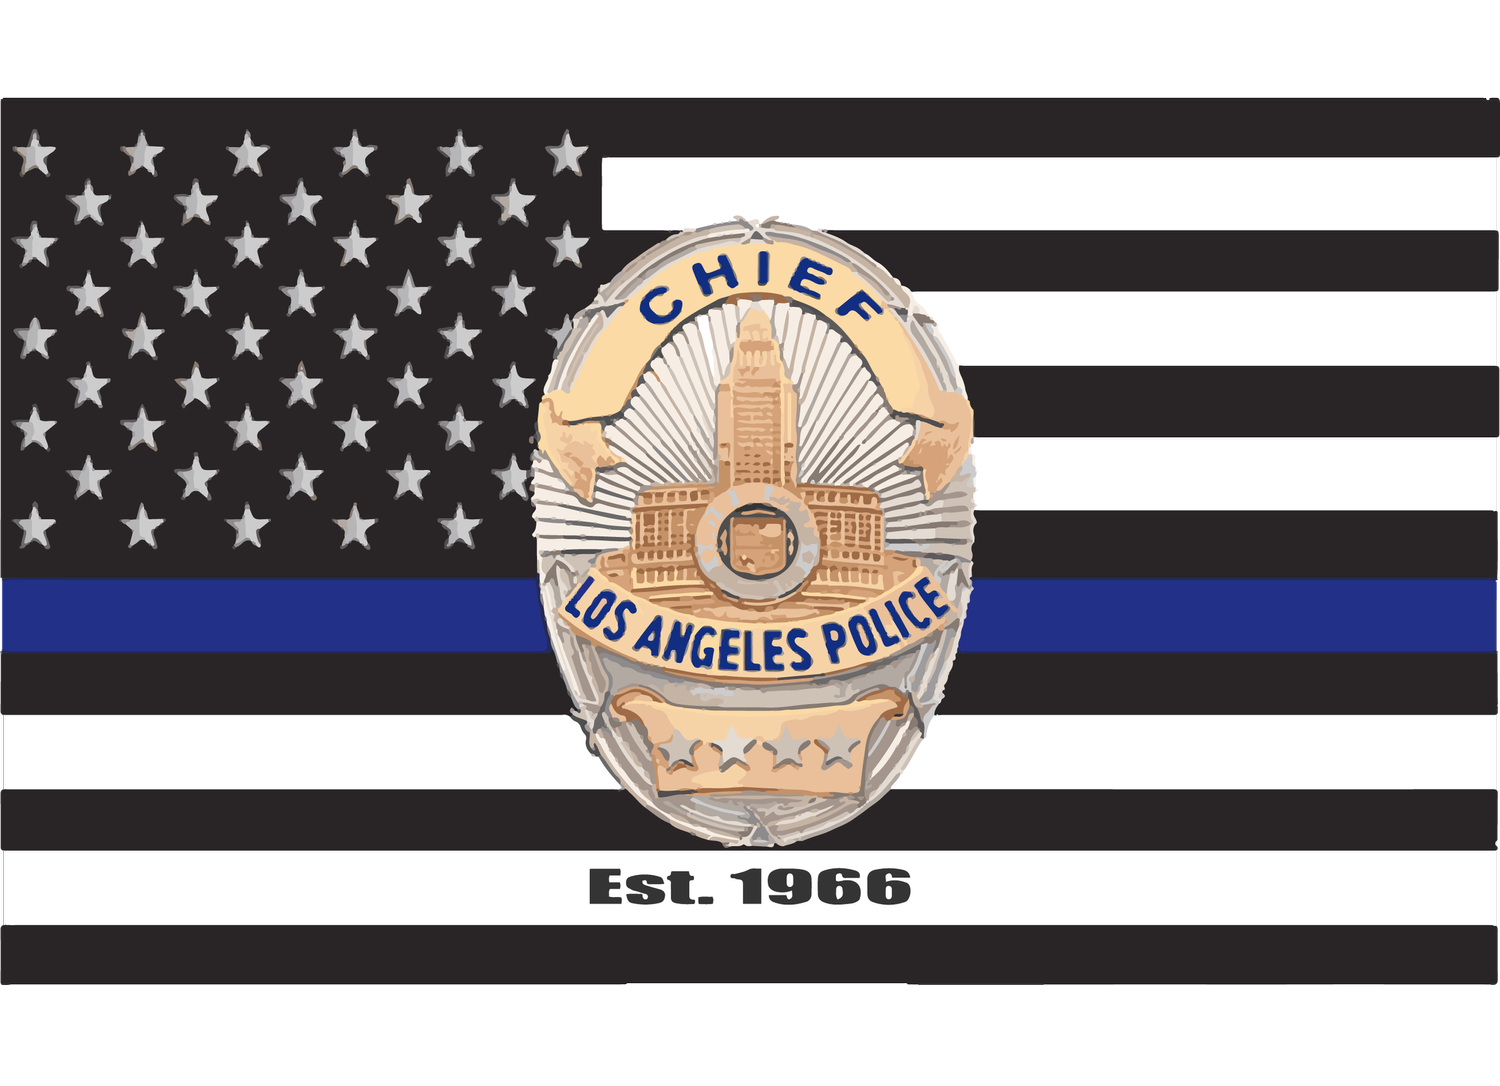 The William H. Parker LAPD Foundation